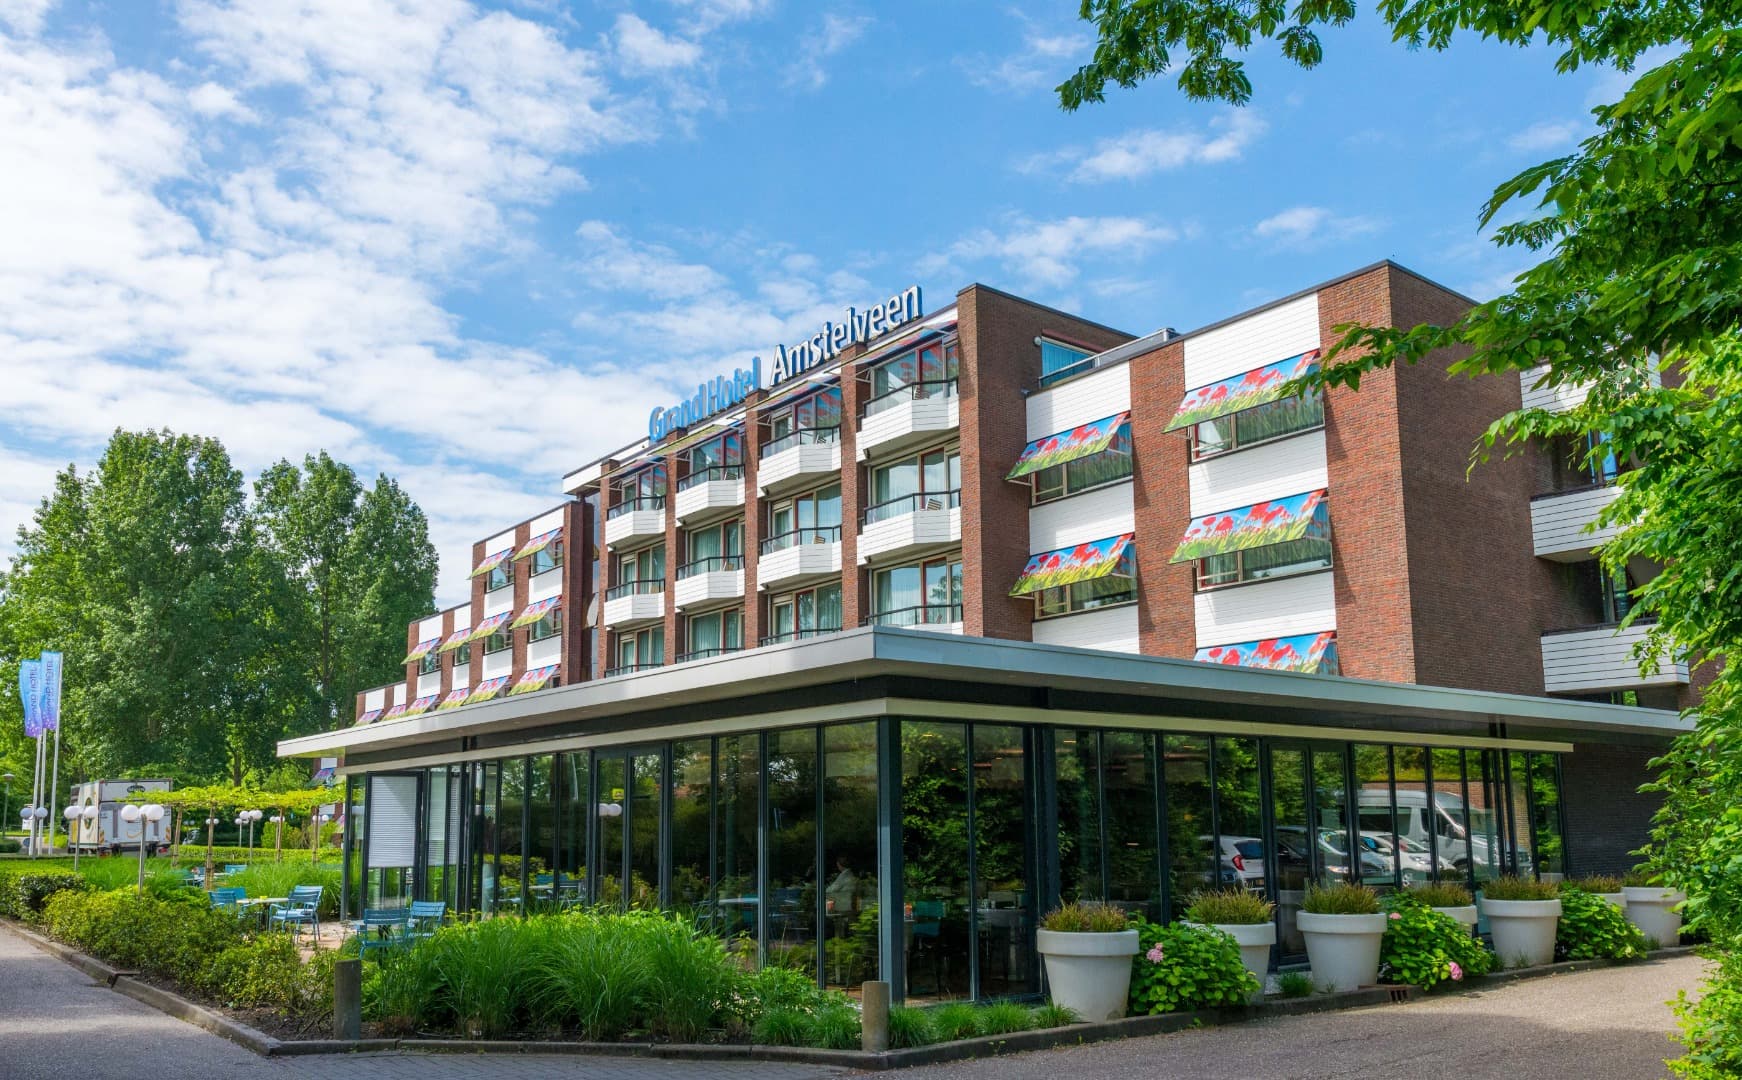 Grand hotel Amstelveen